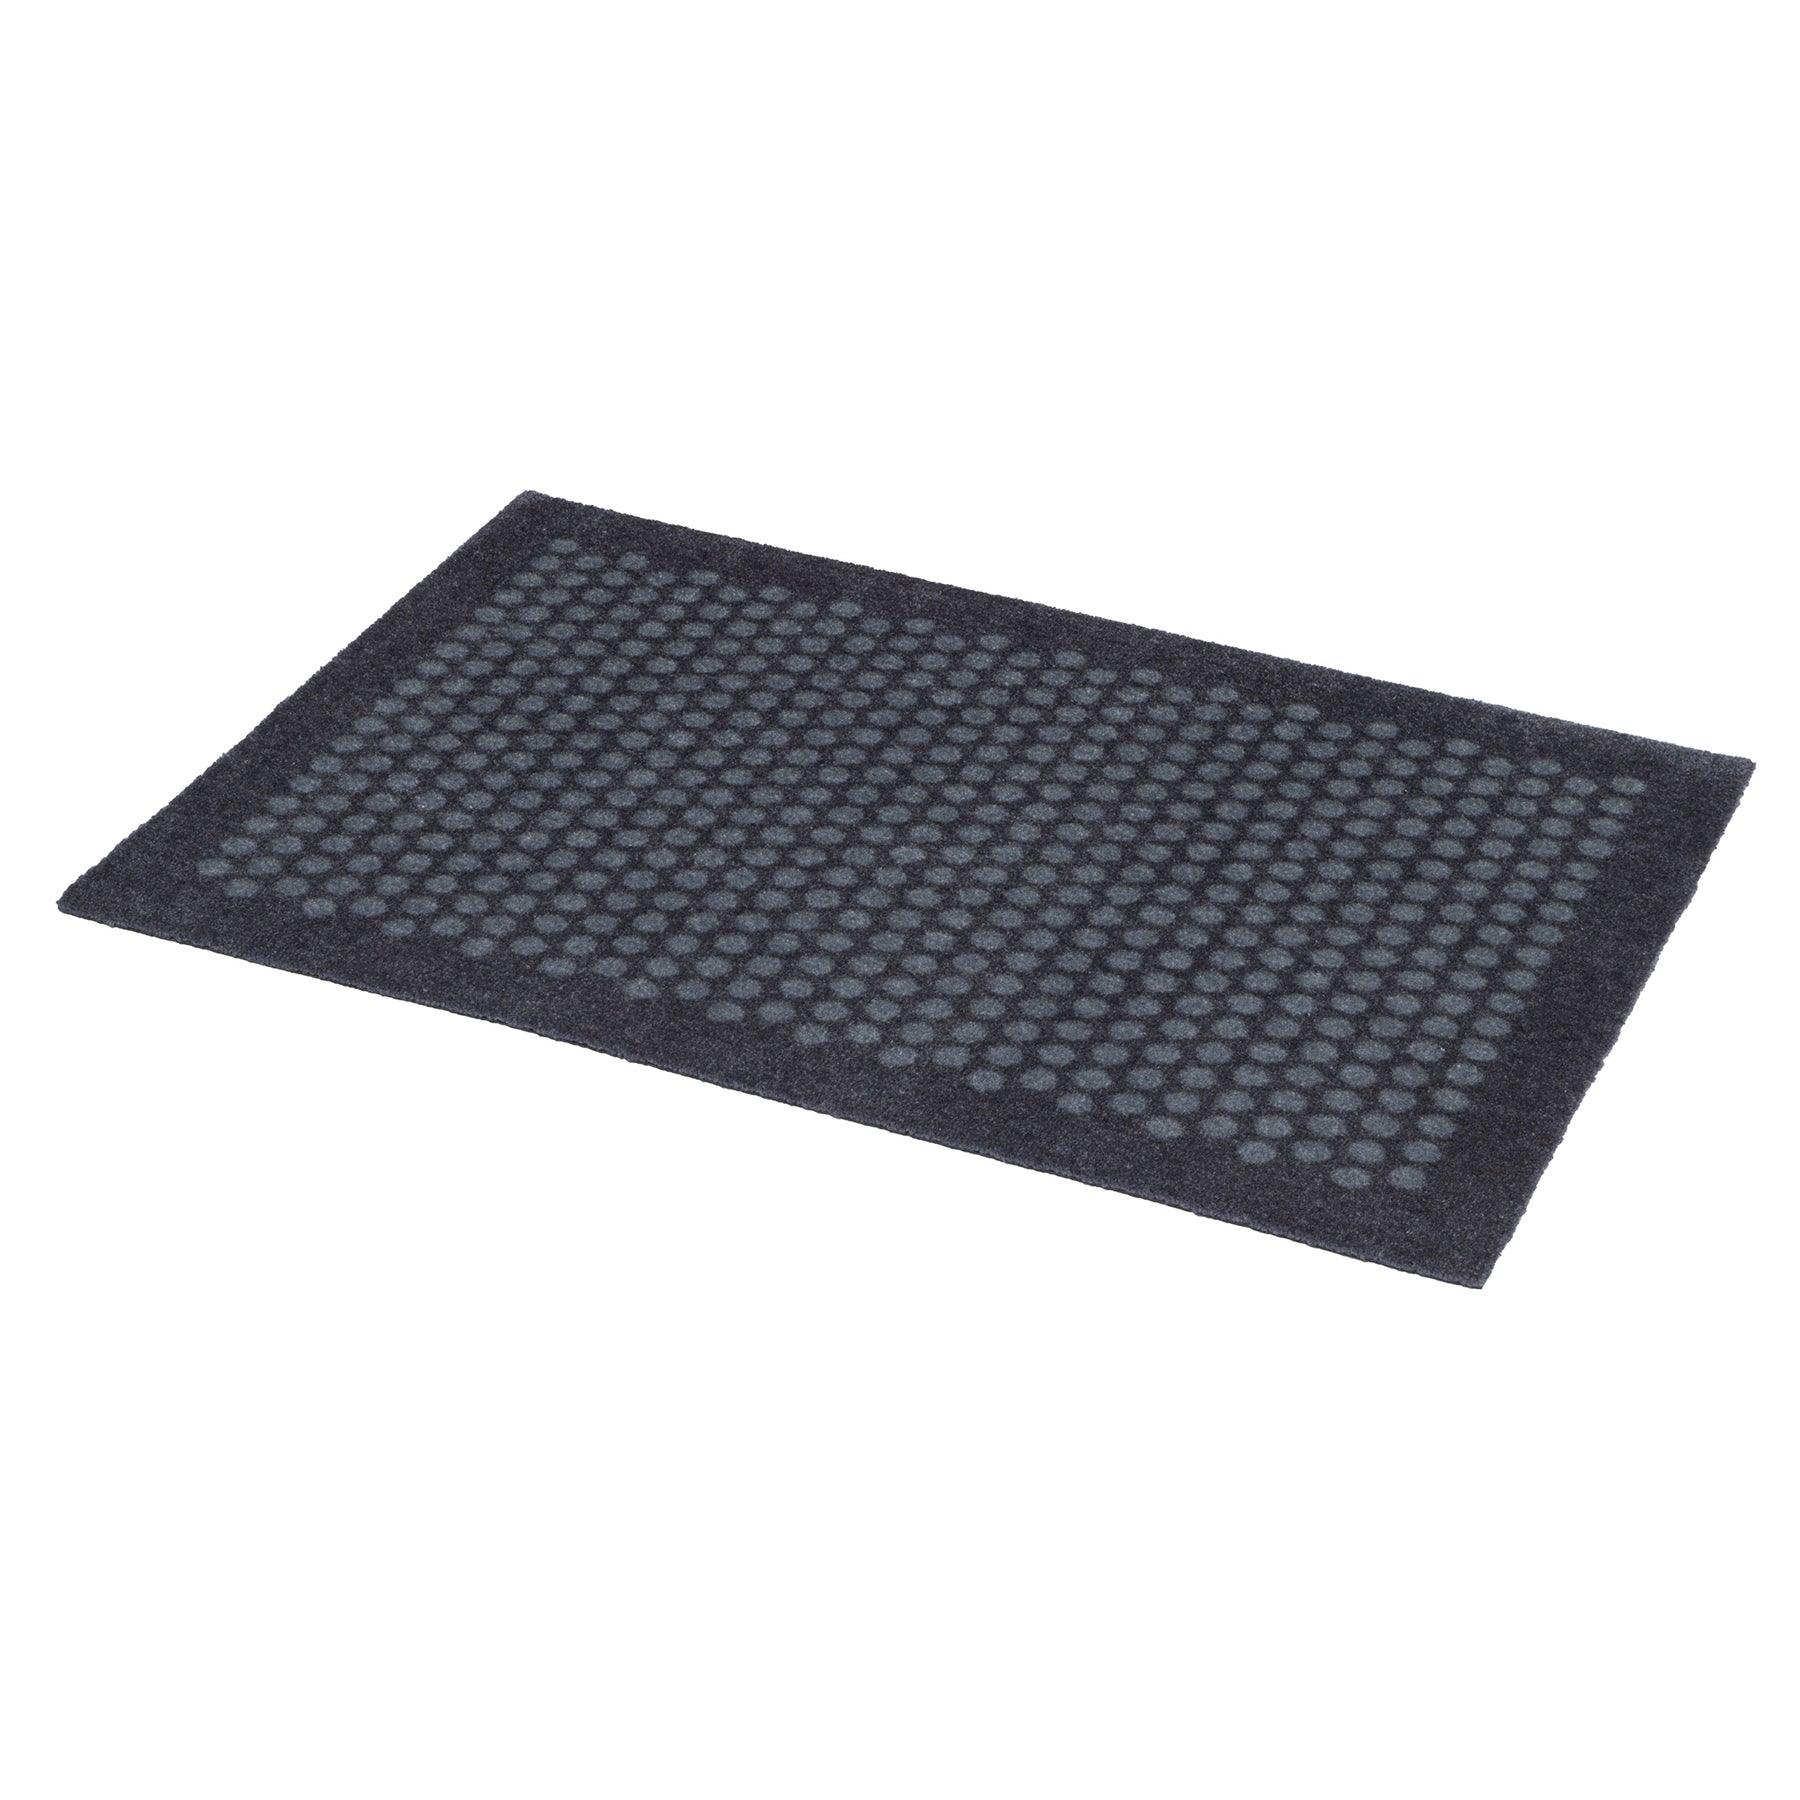 Floor mat 60 x 90 cm - dots/gray